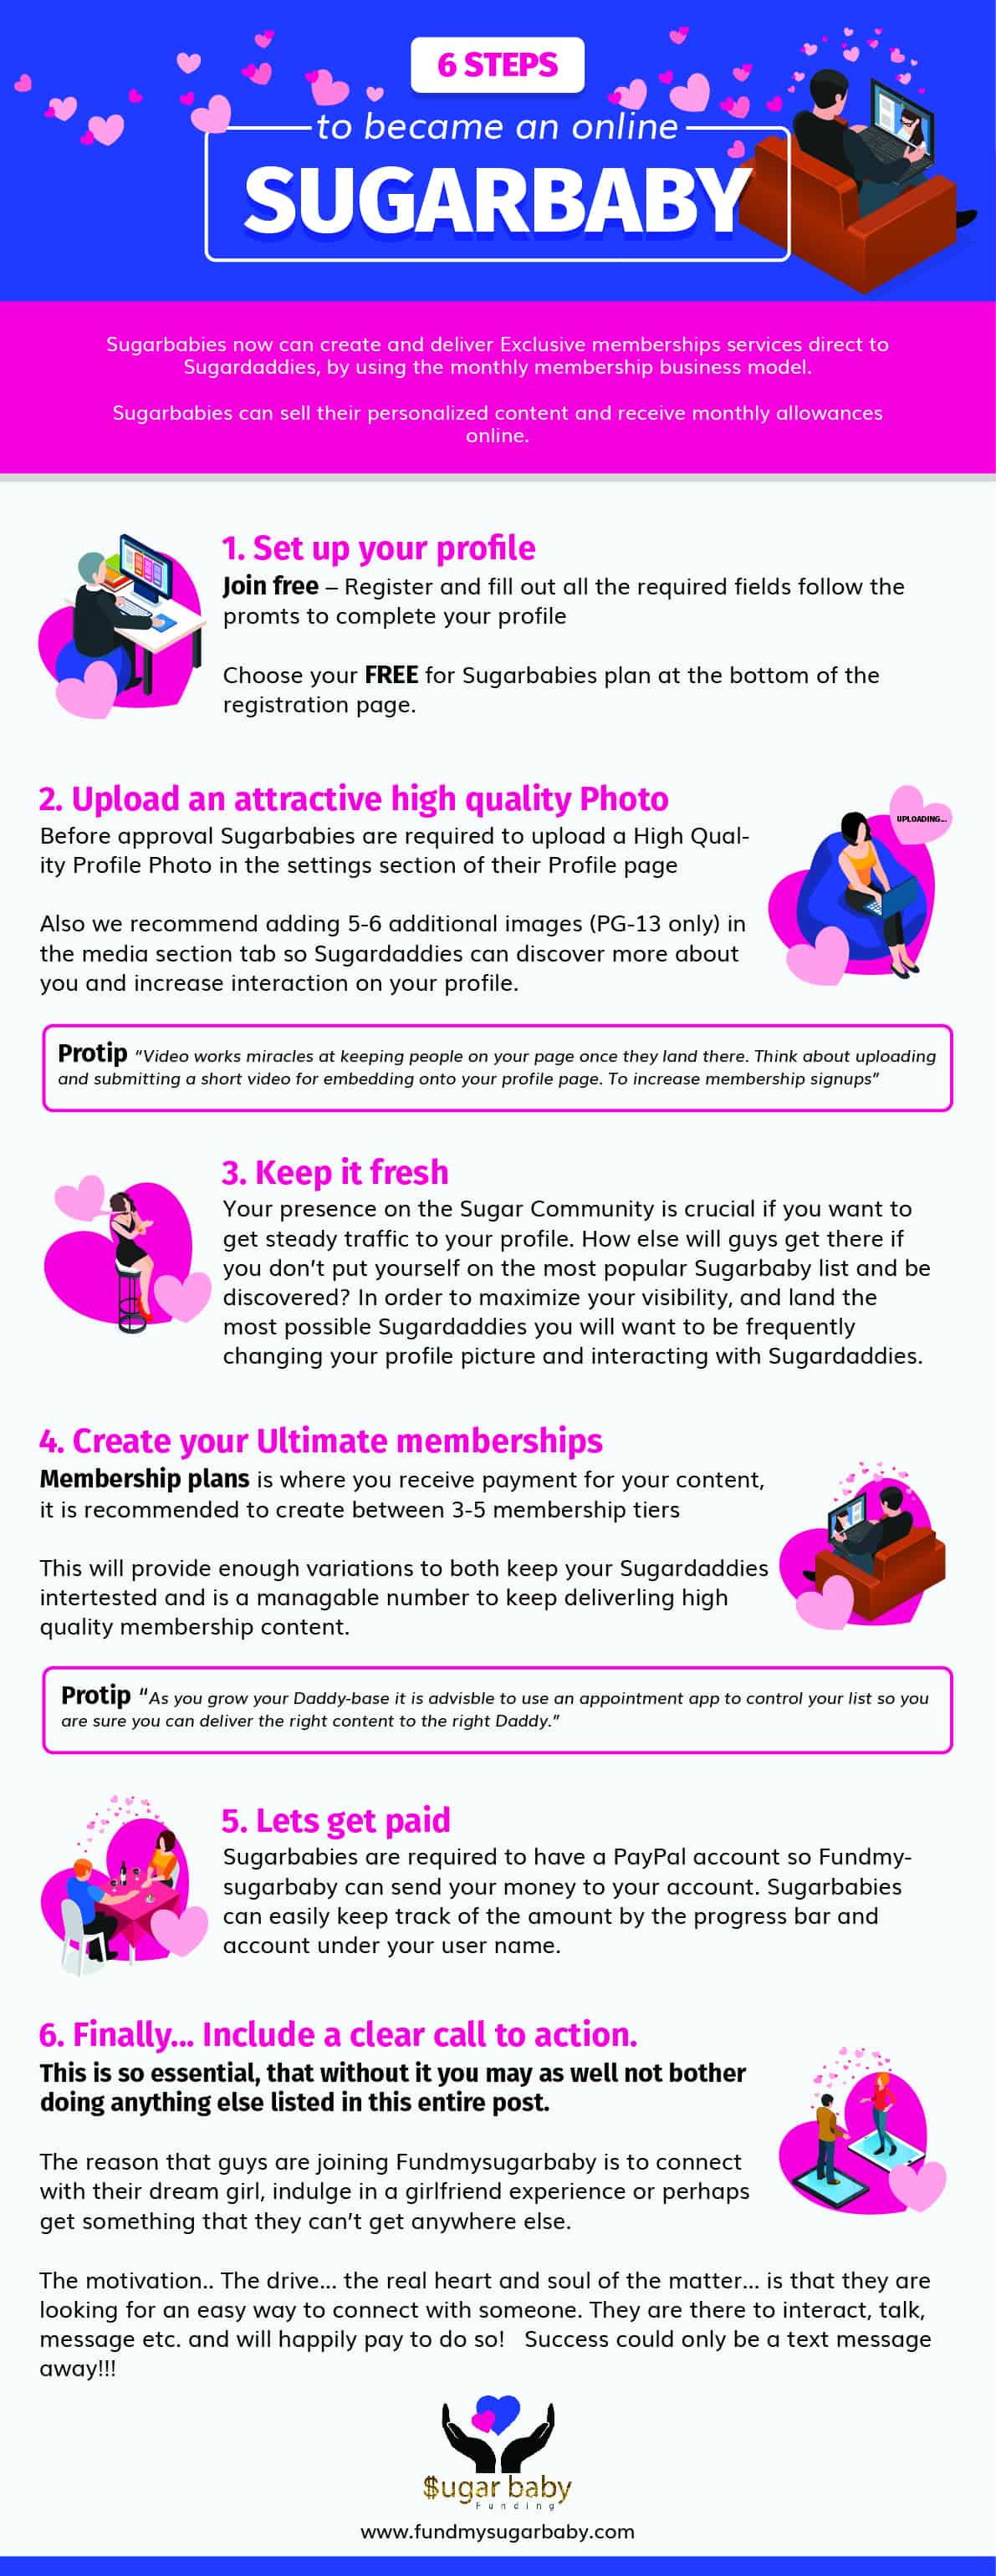 sugar baby tips for beginners uk